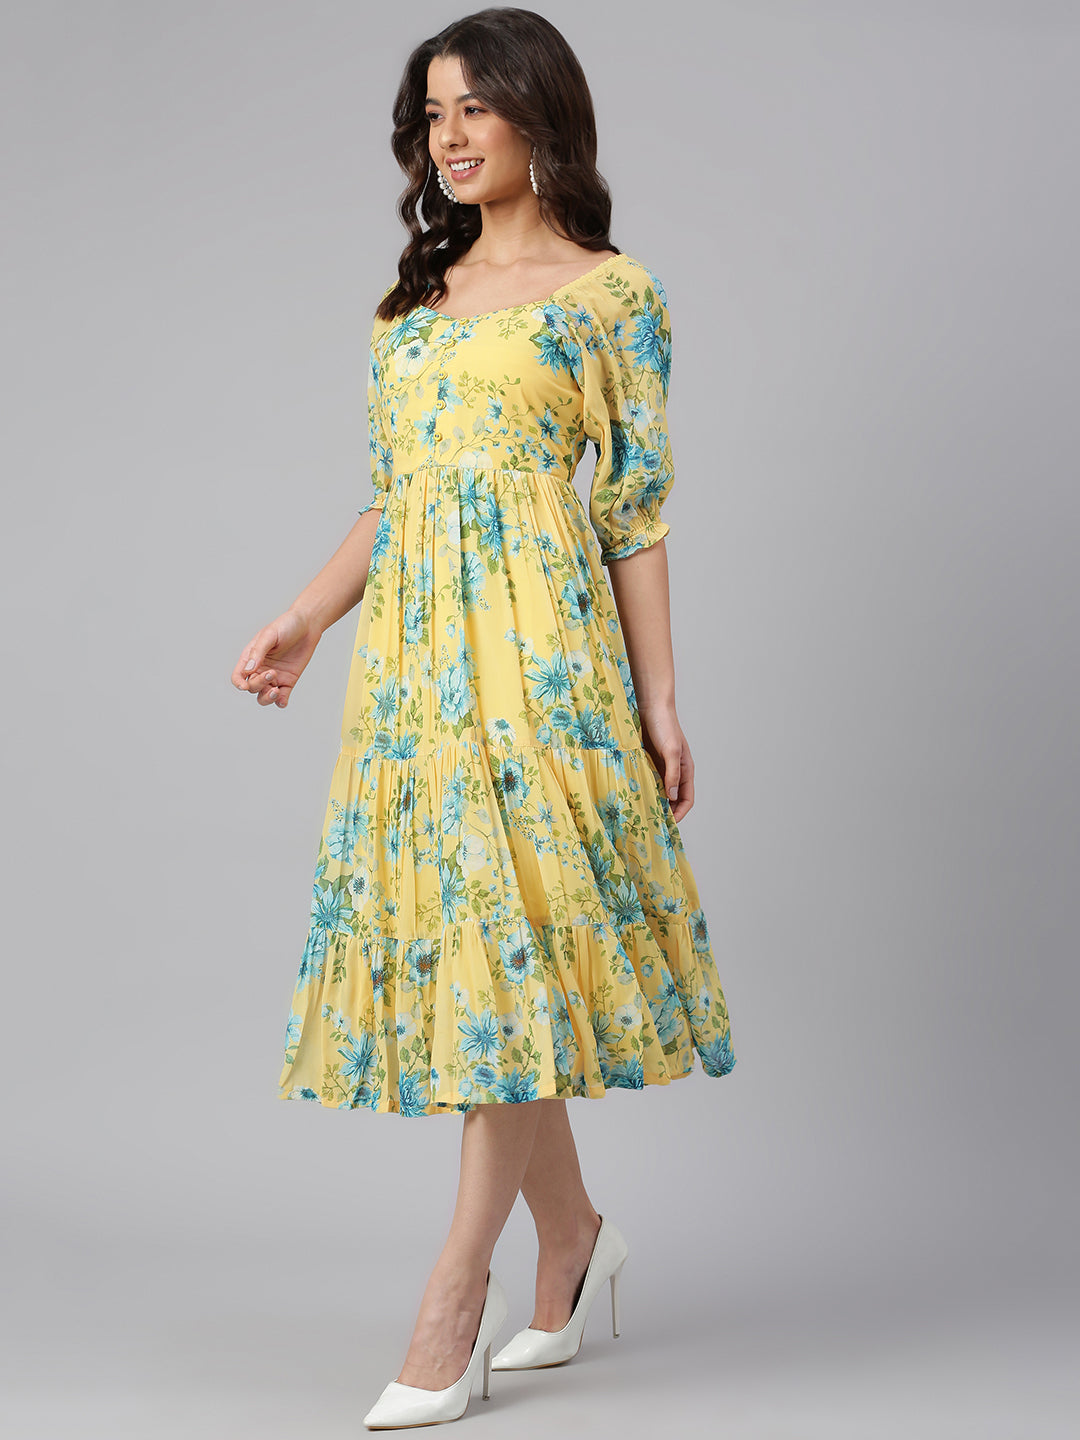 Women's Floral Printed Yellow Georgette Dress - Janasya